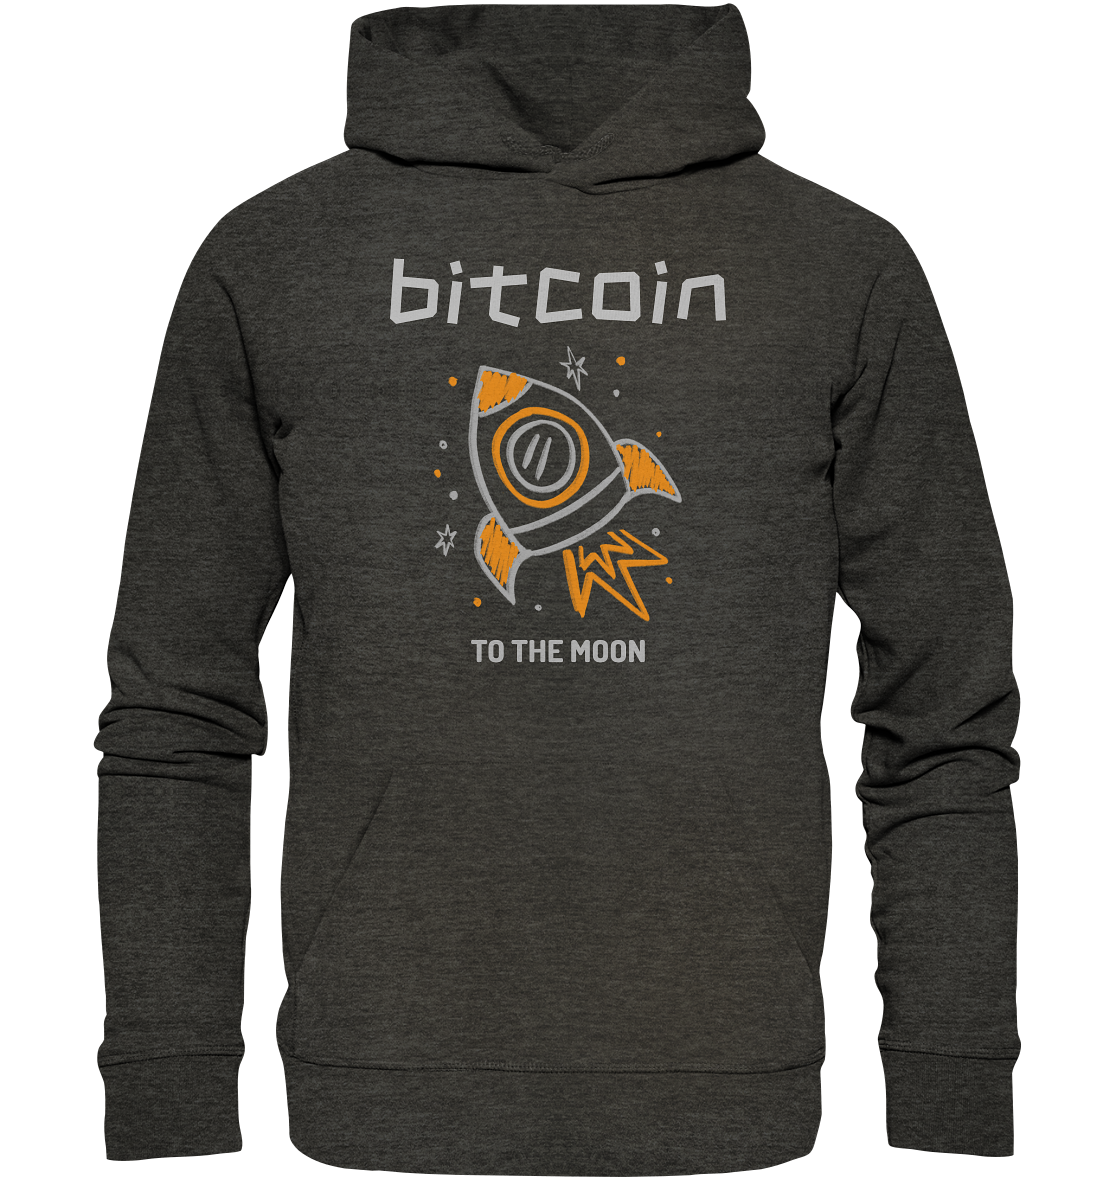 Bitcoin to the moon - Organic Hoodie